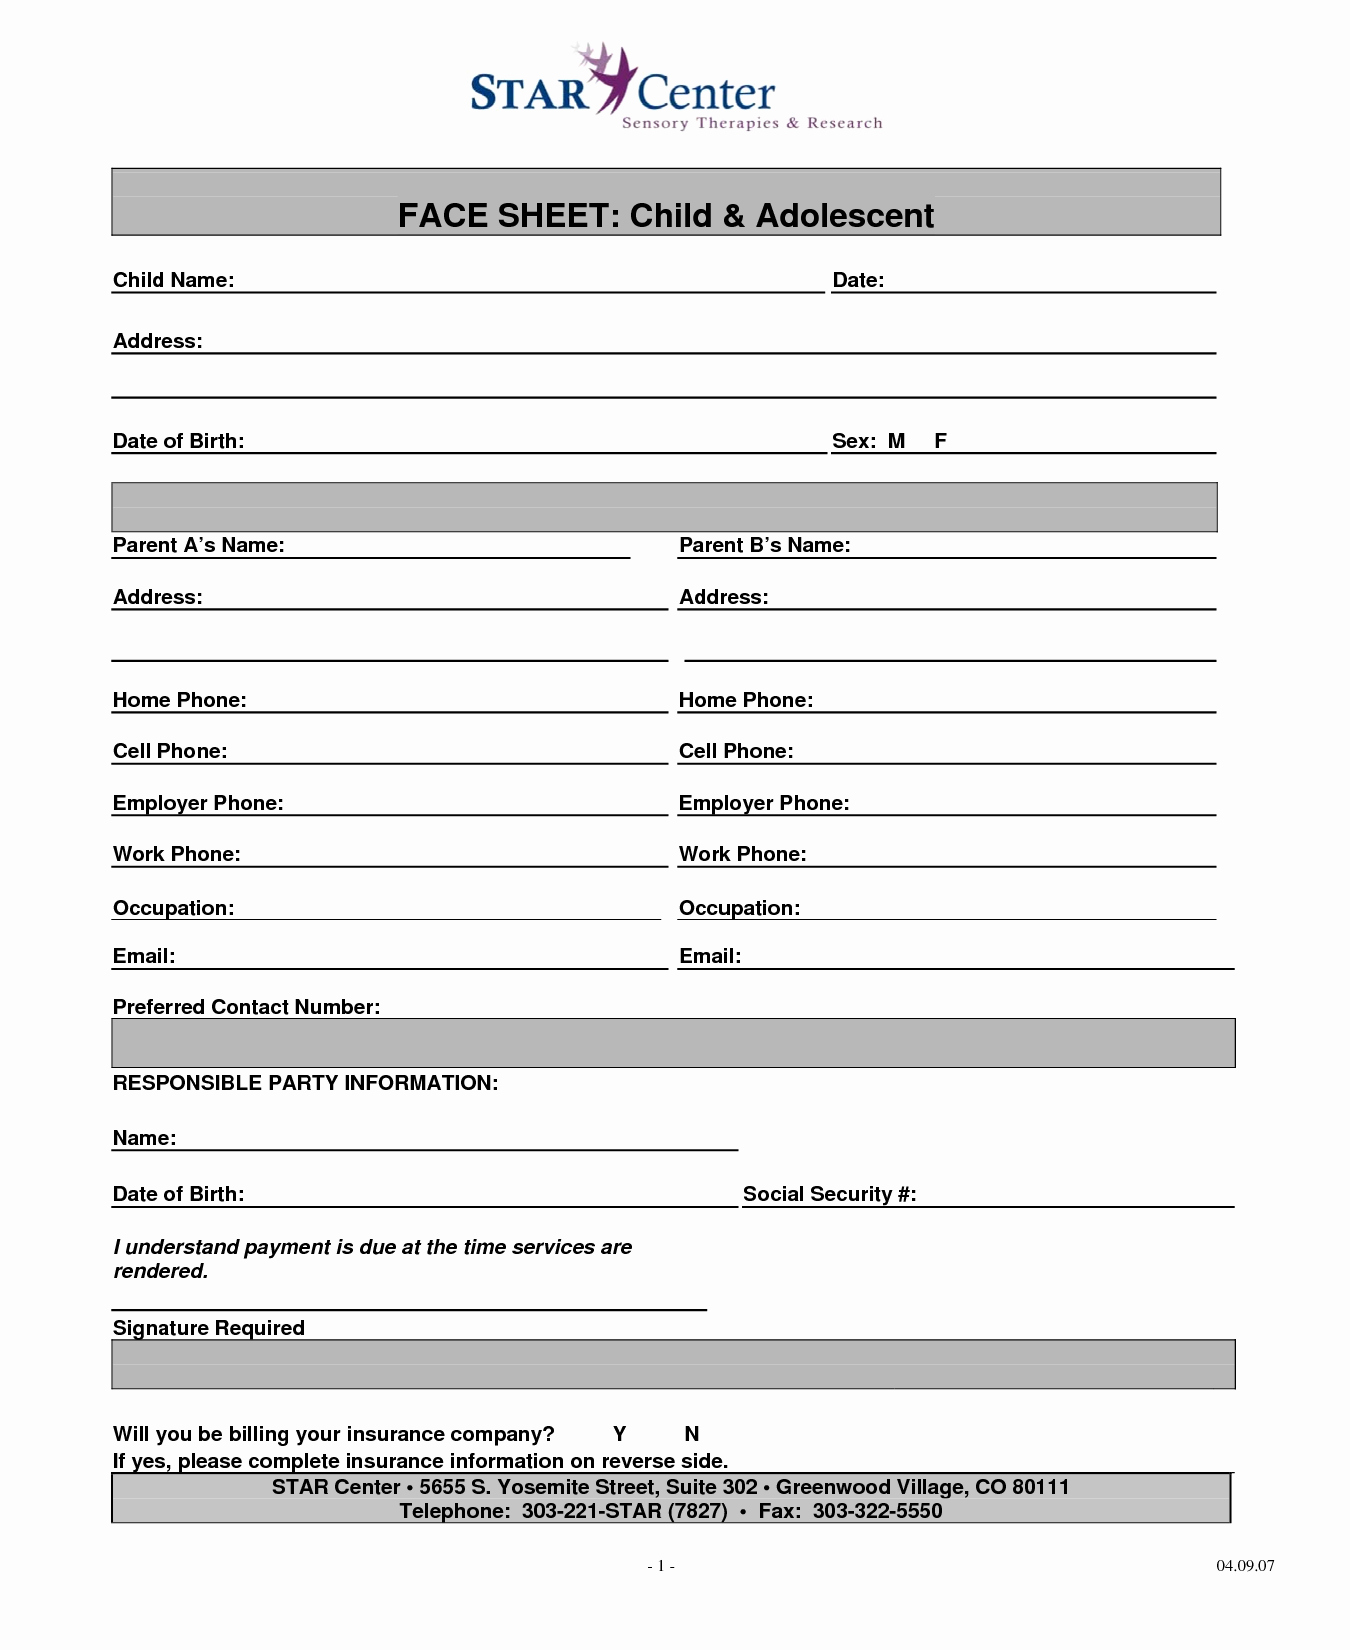 Medical Face Sheet Template Fresh Best S Of Face Sheet Template Patient Demographic